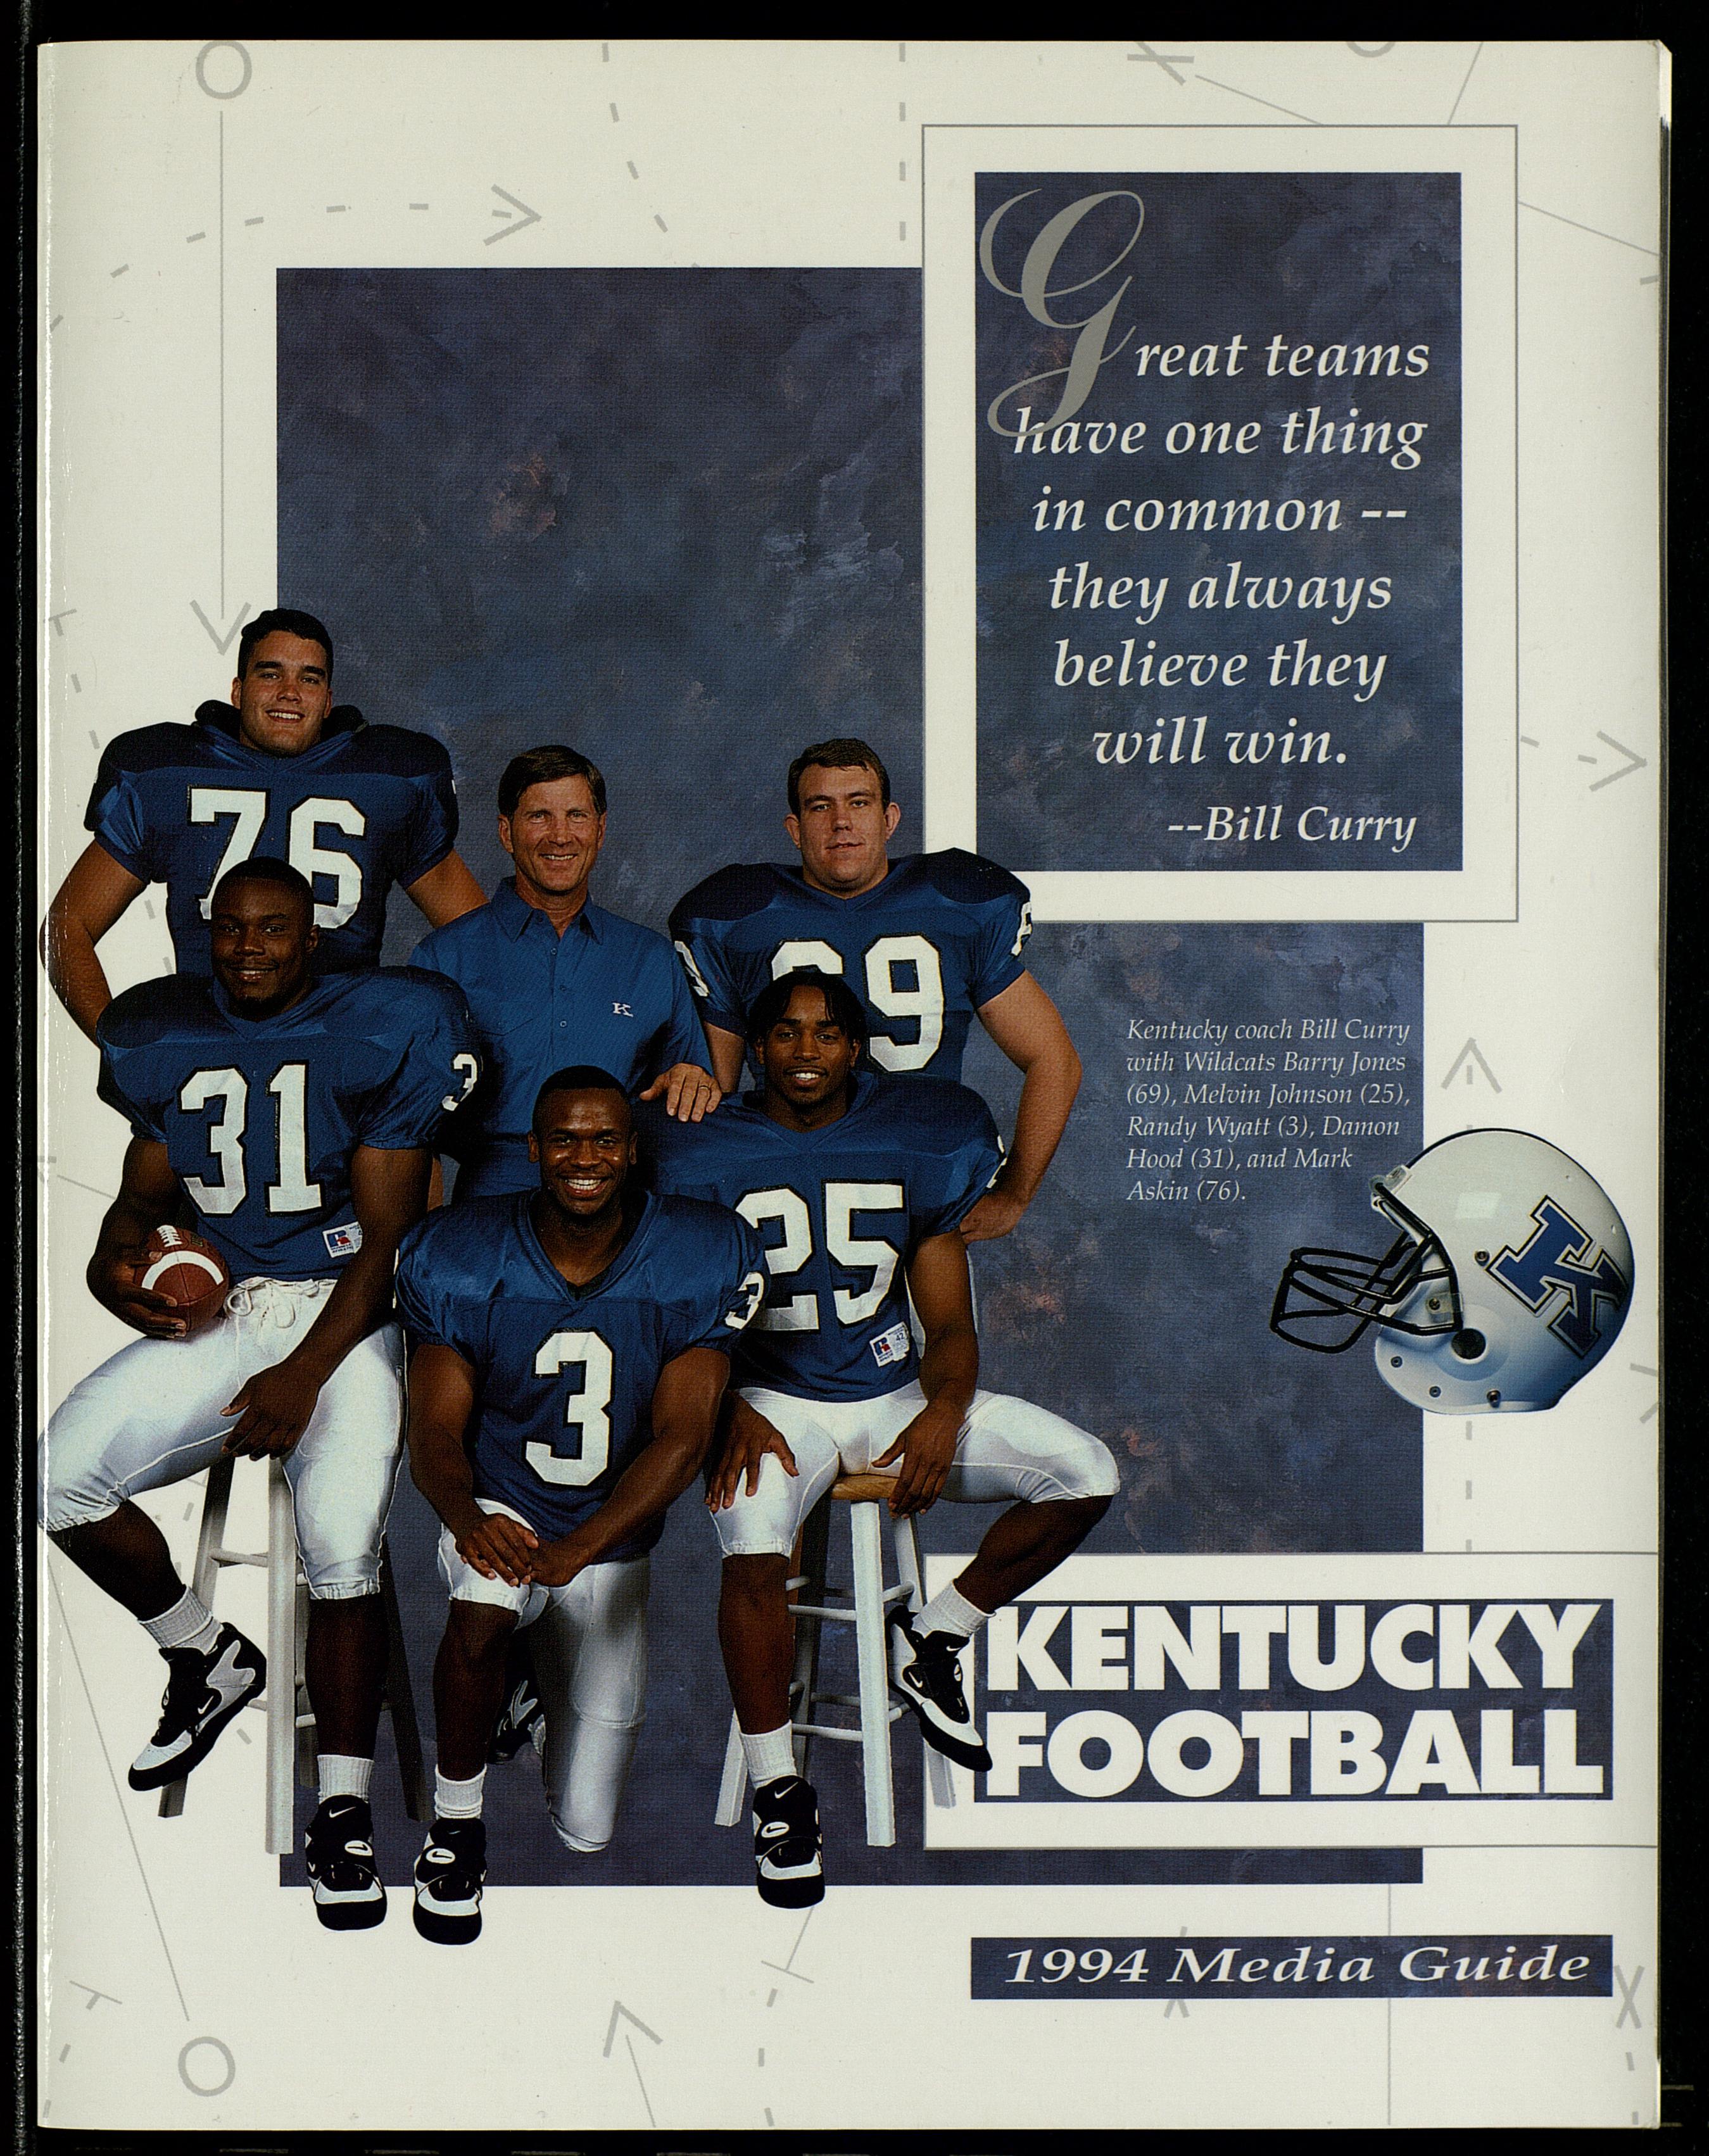 University of Kentucky Football Media Guide, 1994